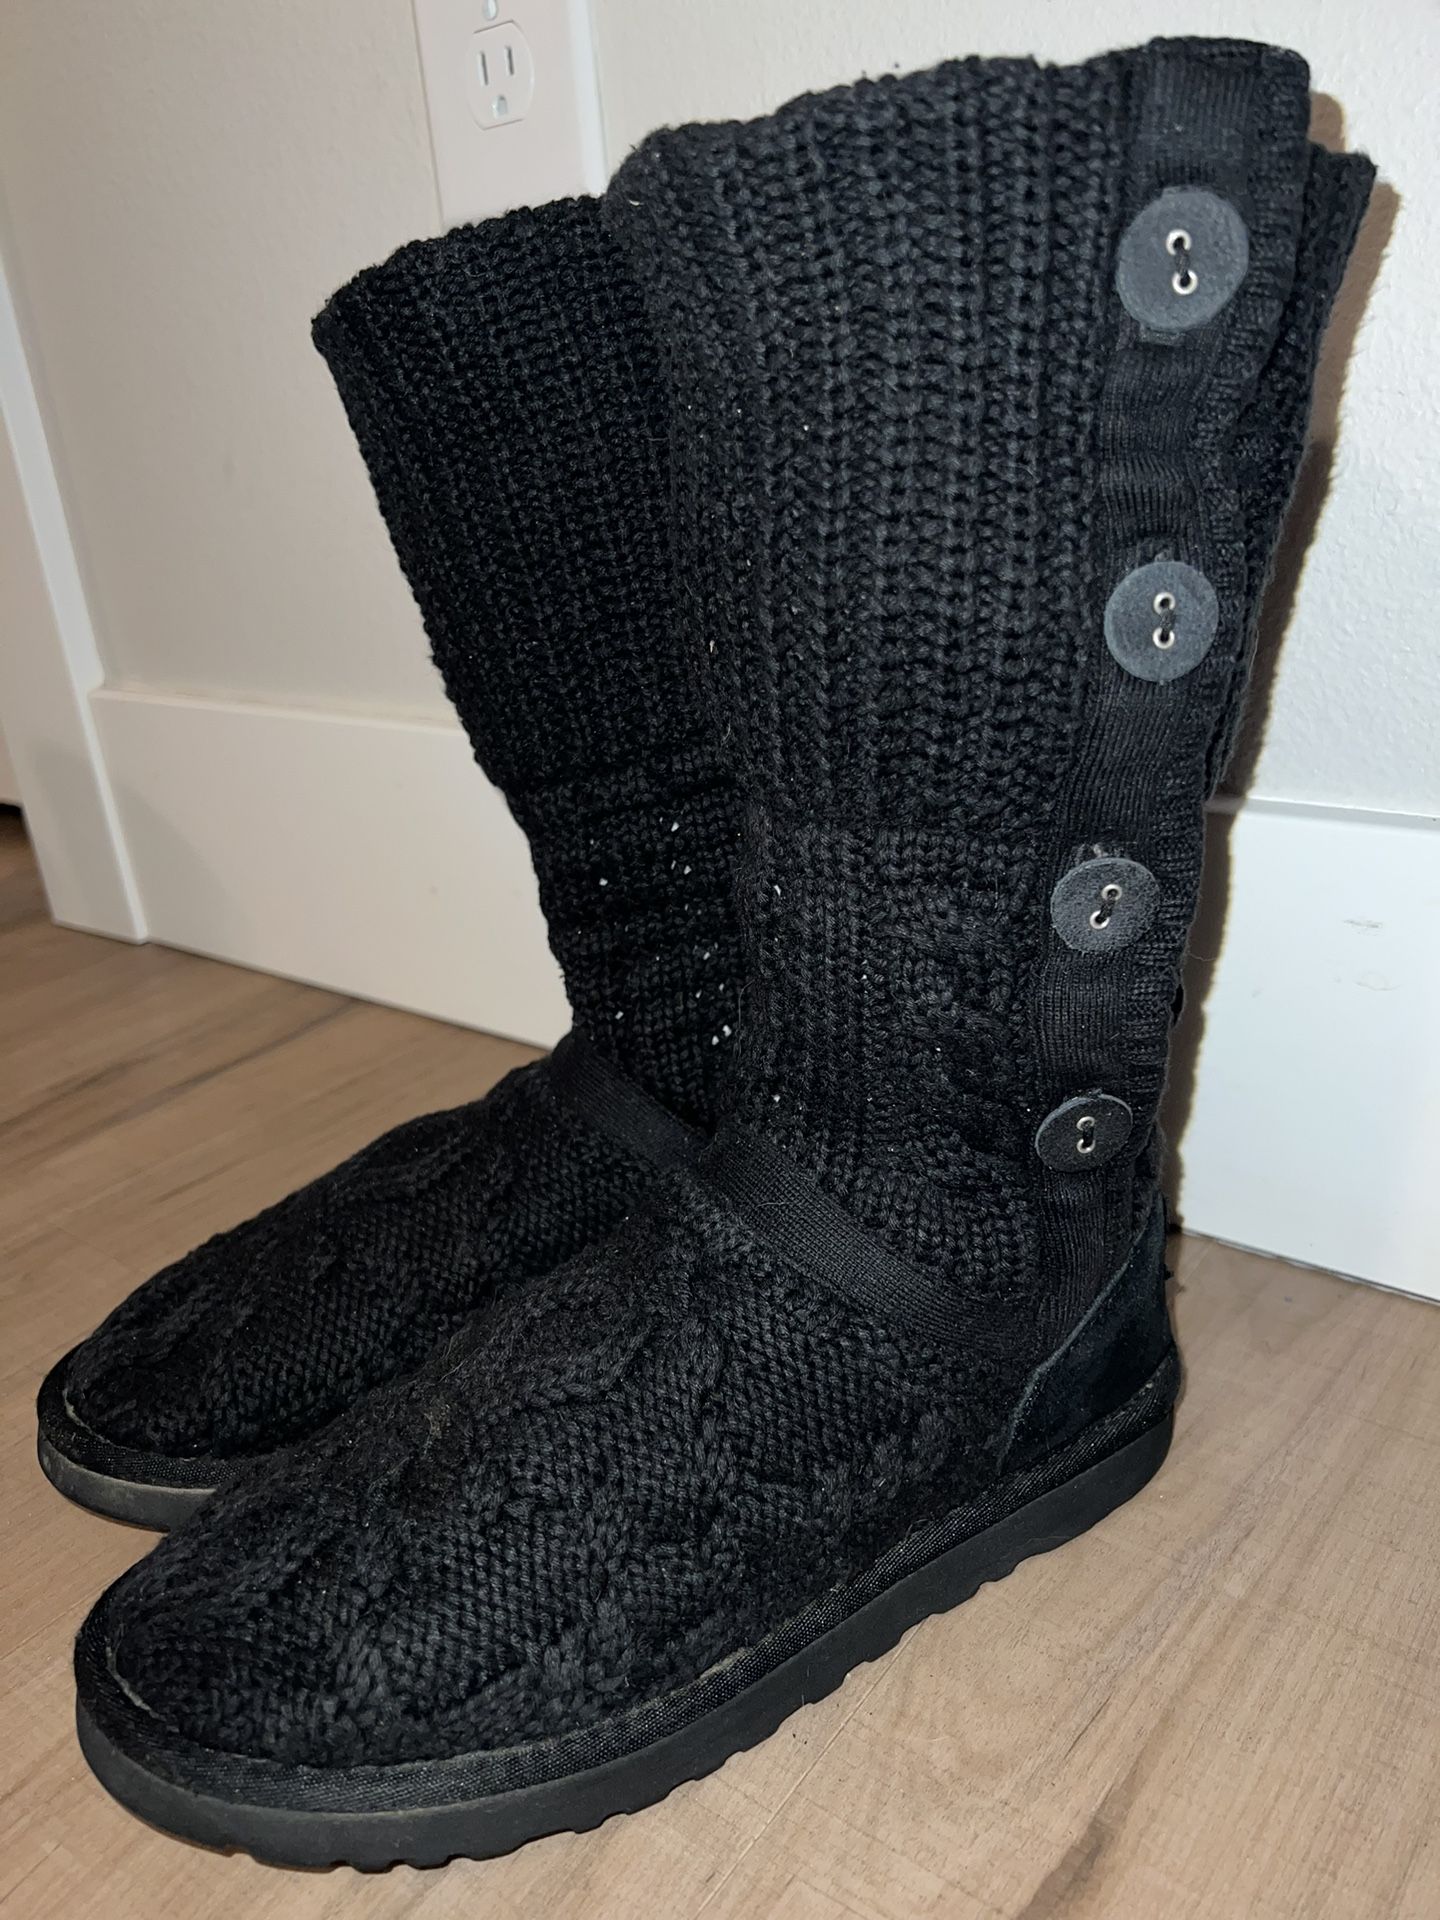 Ugg Black Woven Boots, UGG AUSTRALIA, Womens Size 7